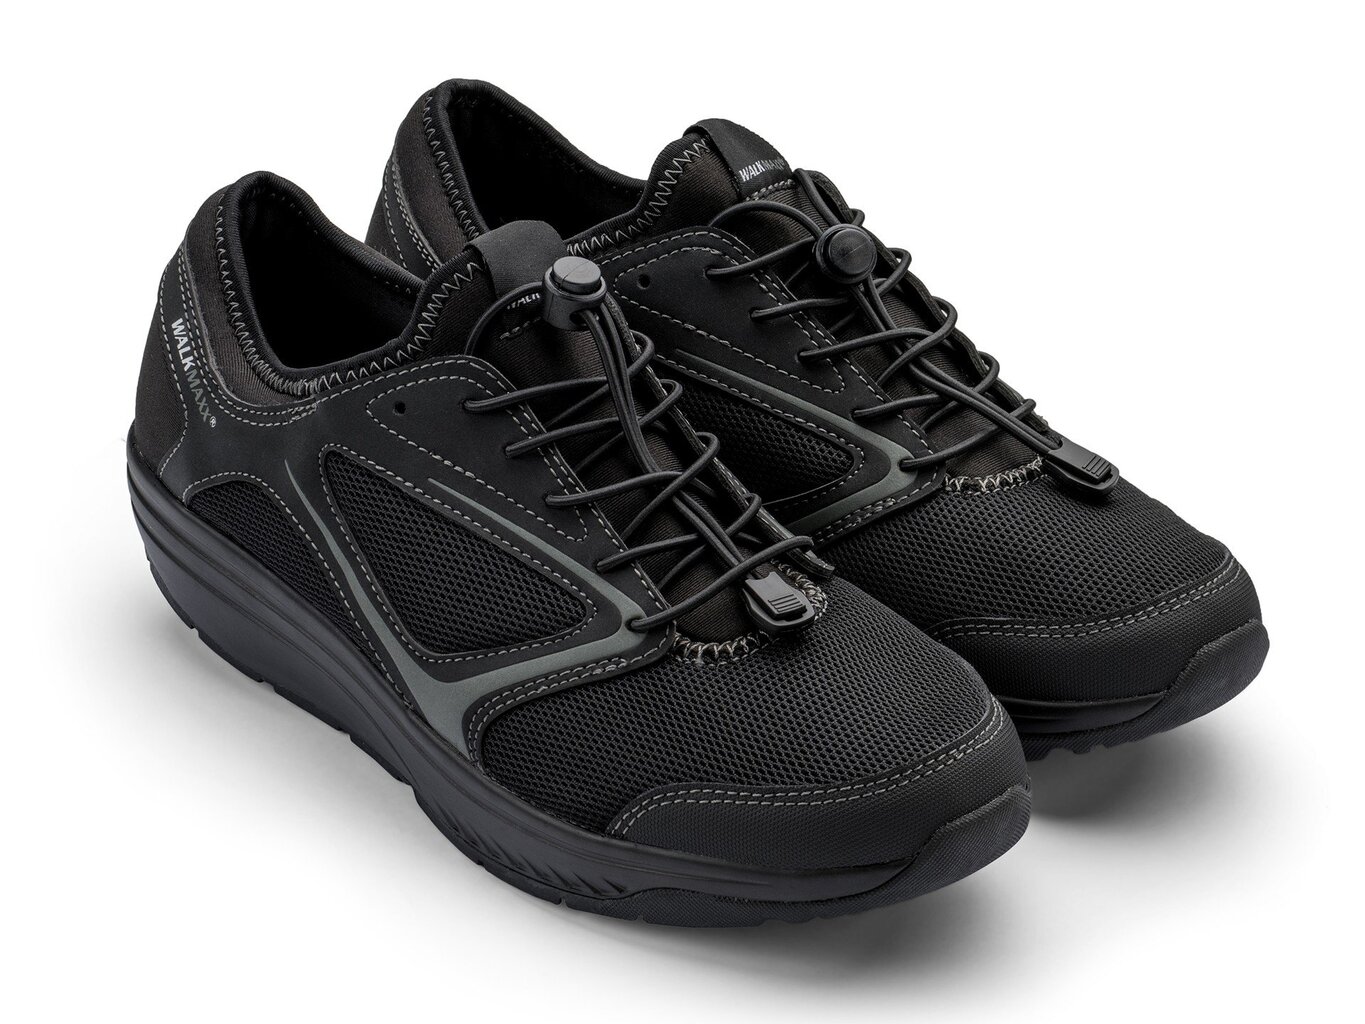 Vyriški batai Walkmaxx Adaptive Casual 2.0 kaina | pigu.lt